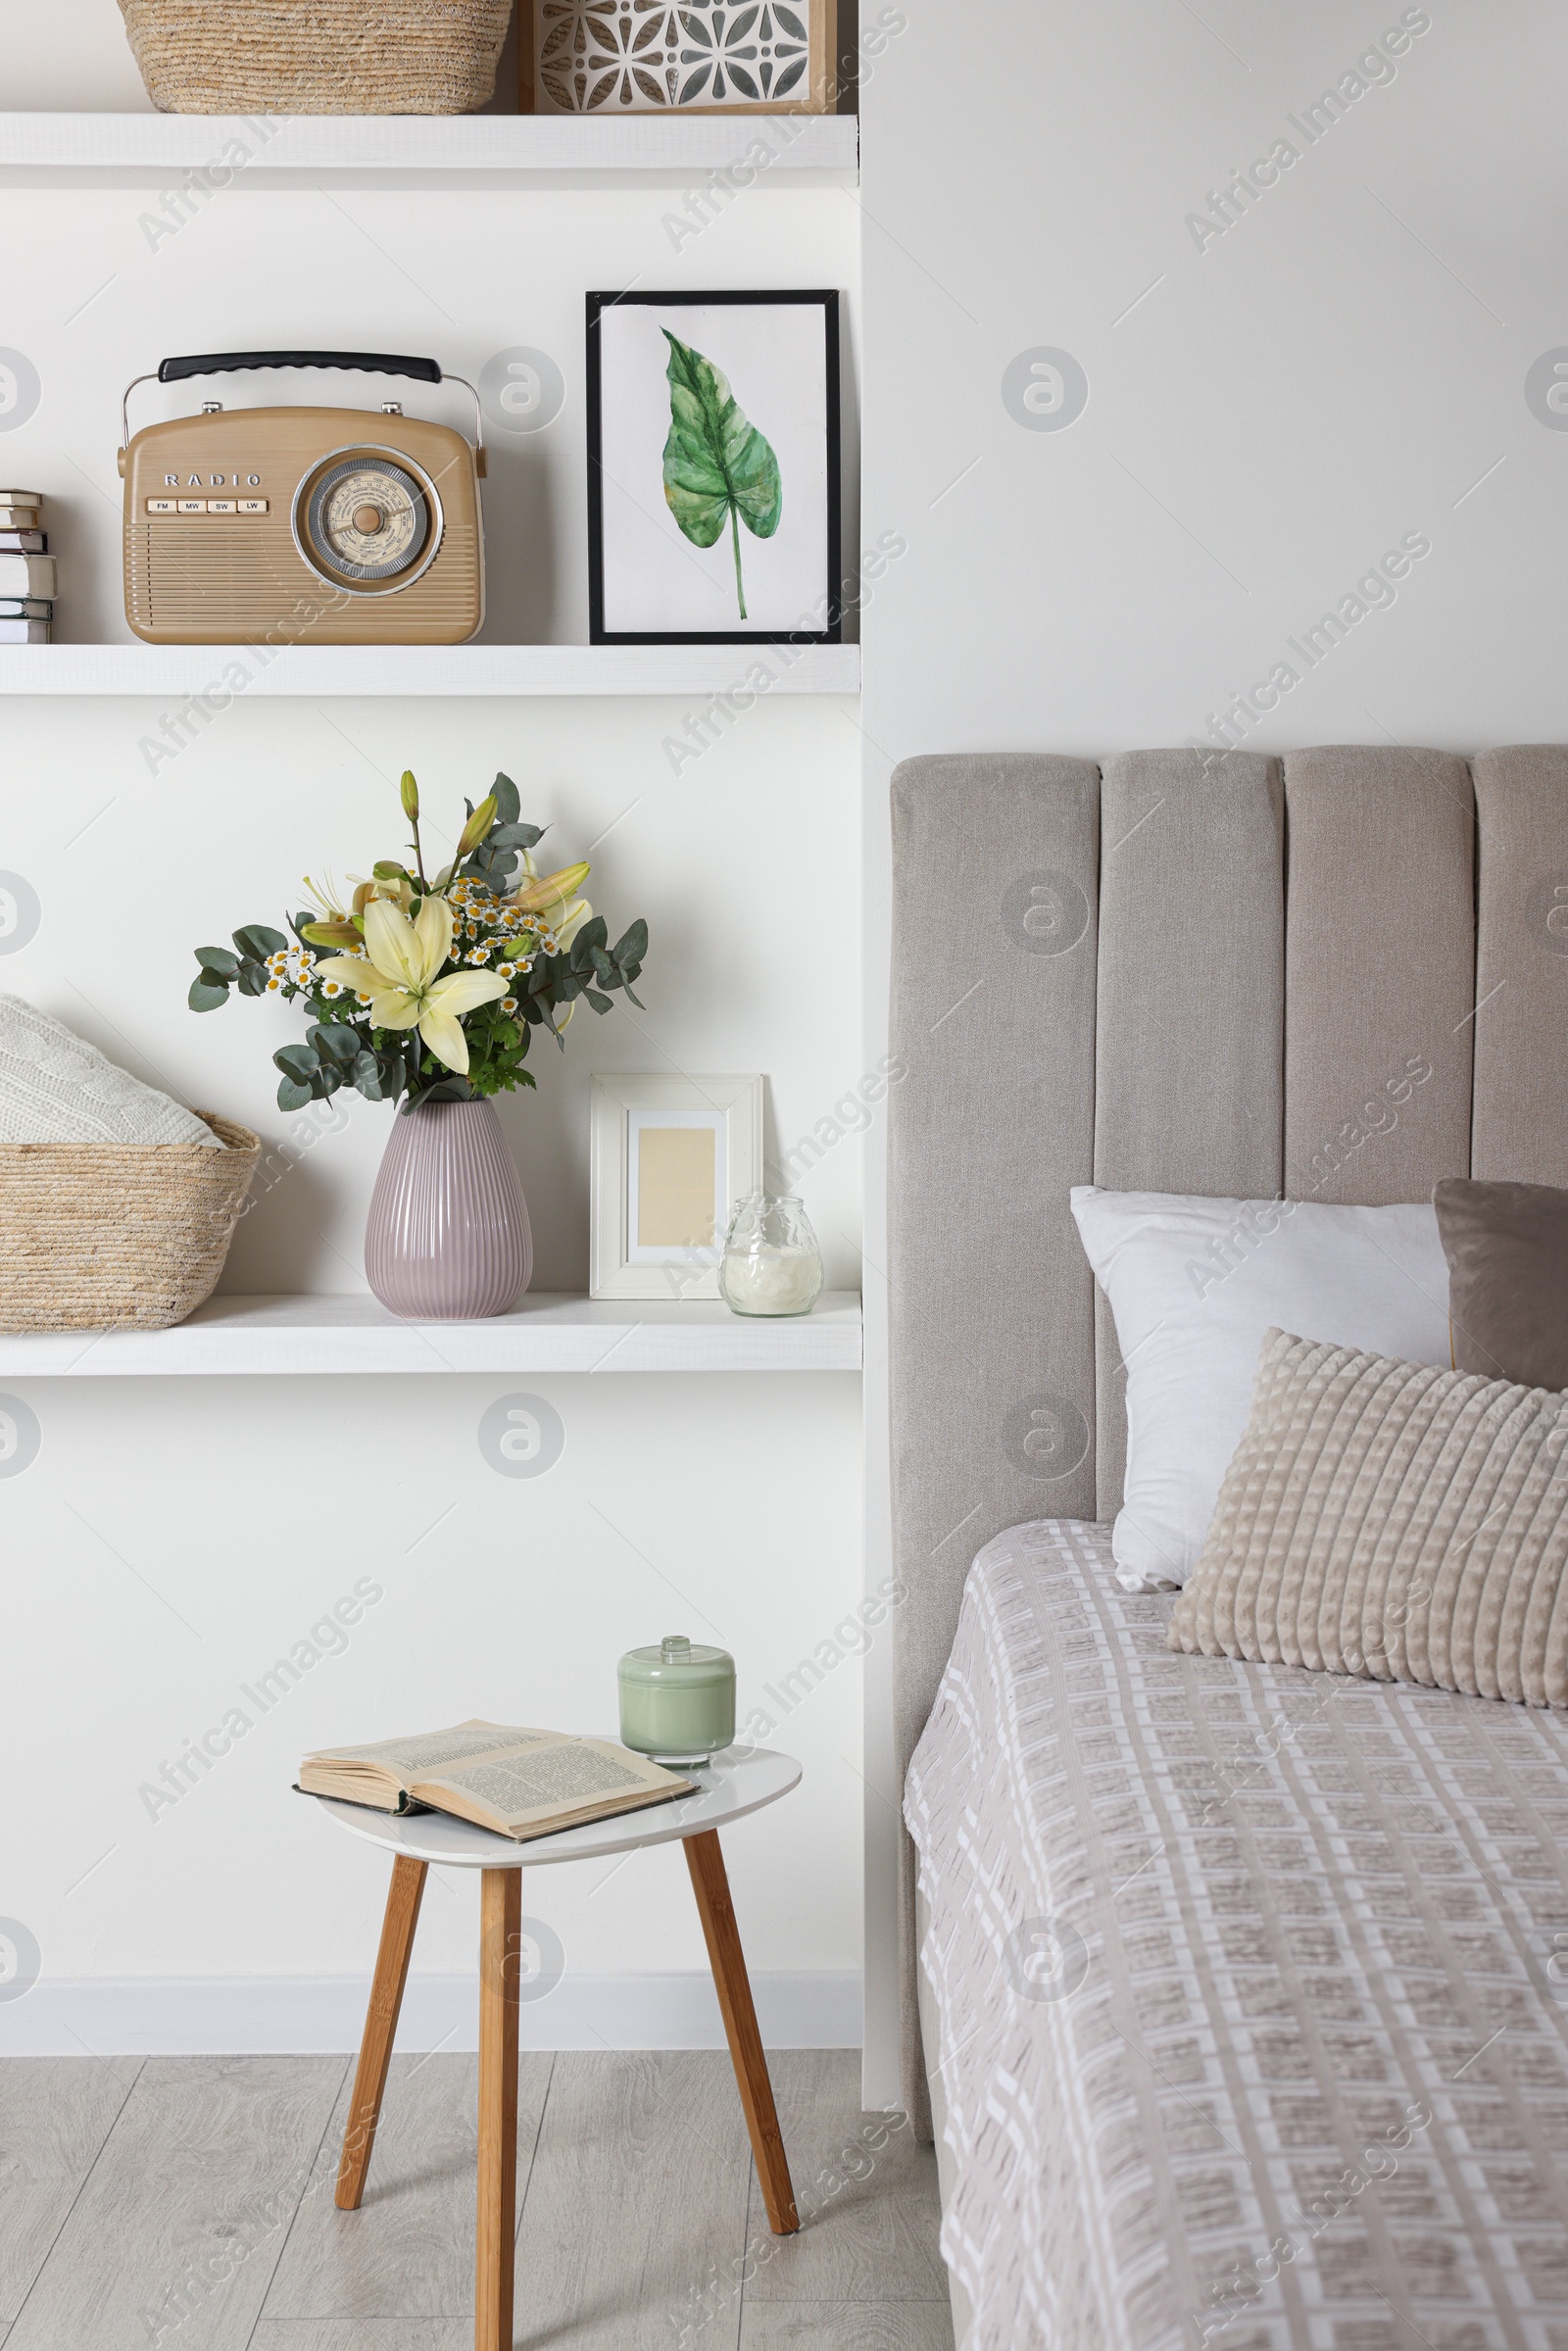 Photo of Stylish vase with flowers, retro radio and decor on shelves indoors. Bedroom interior elements